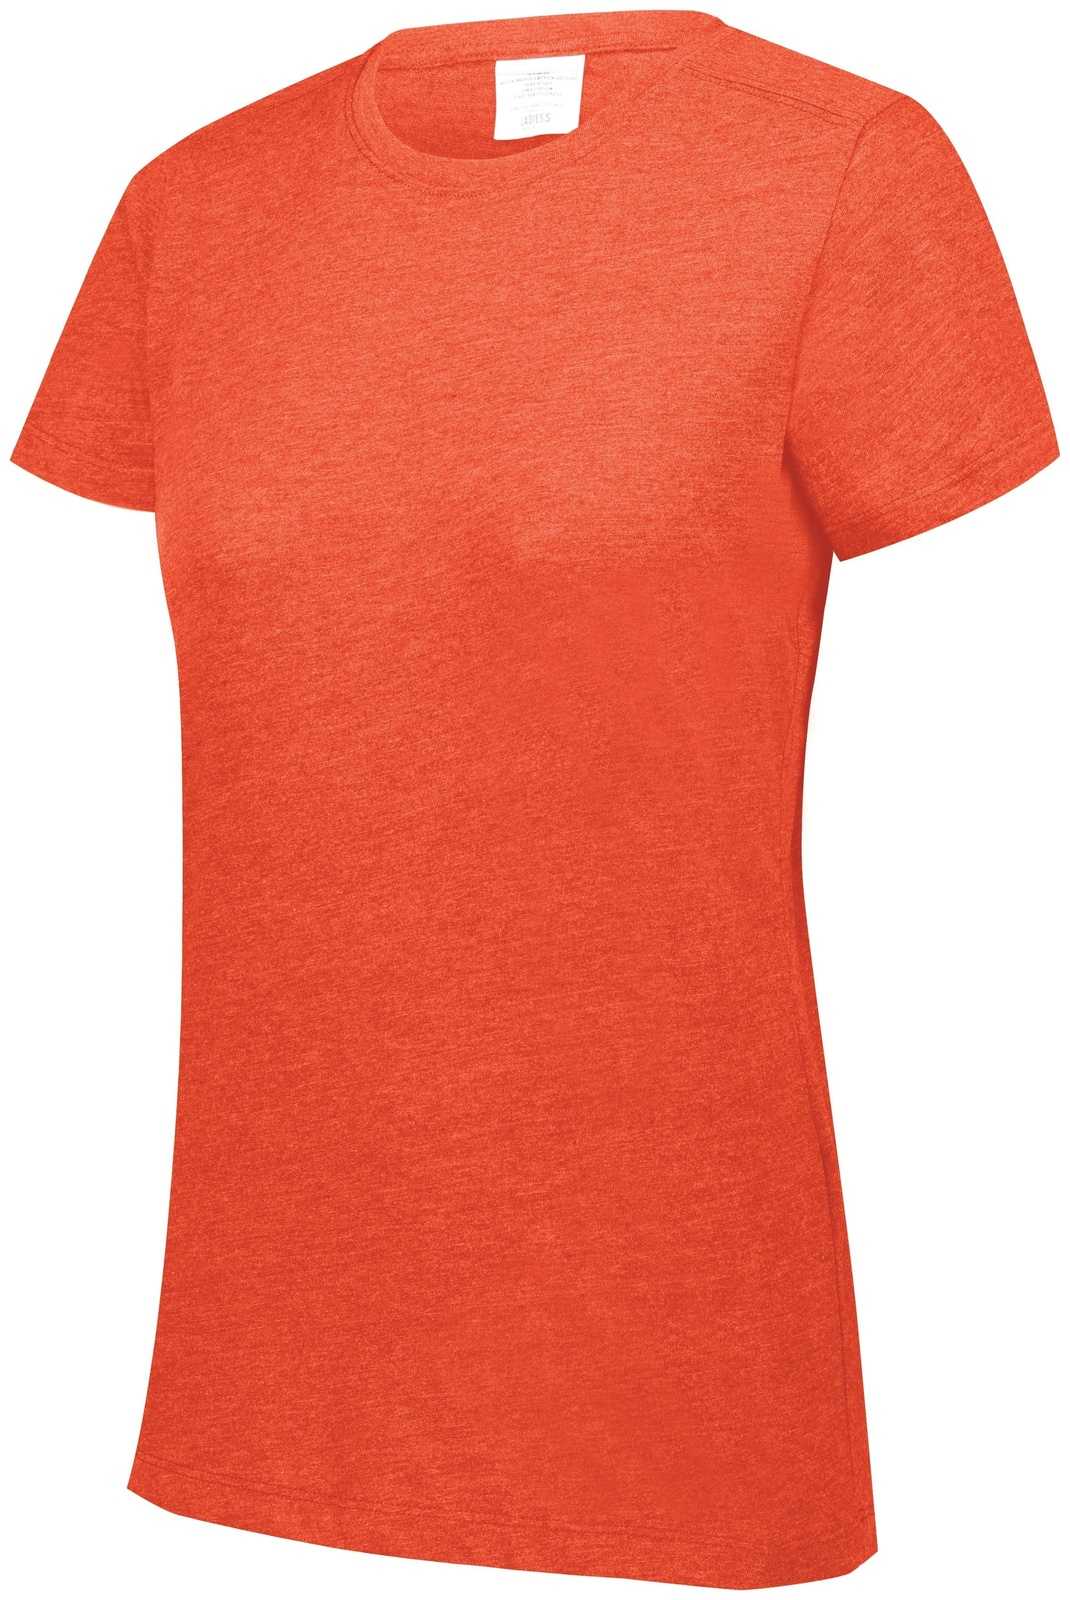 Augusta 3067 Ladies Tri-Blend T-Shirt - Orange Heather - HIT a Double